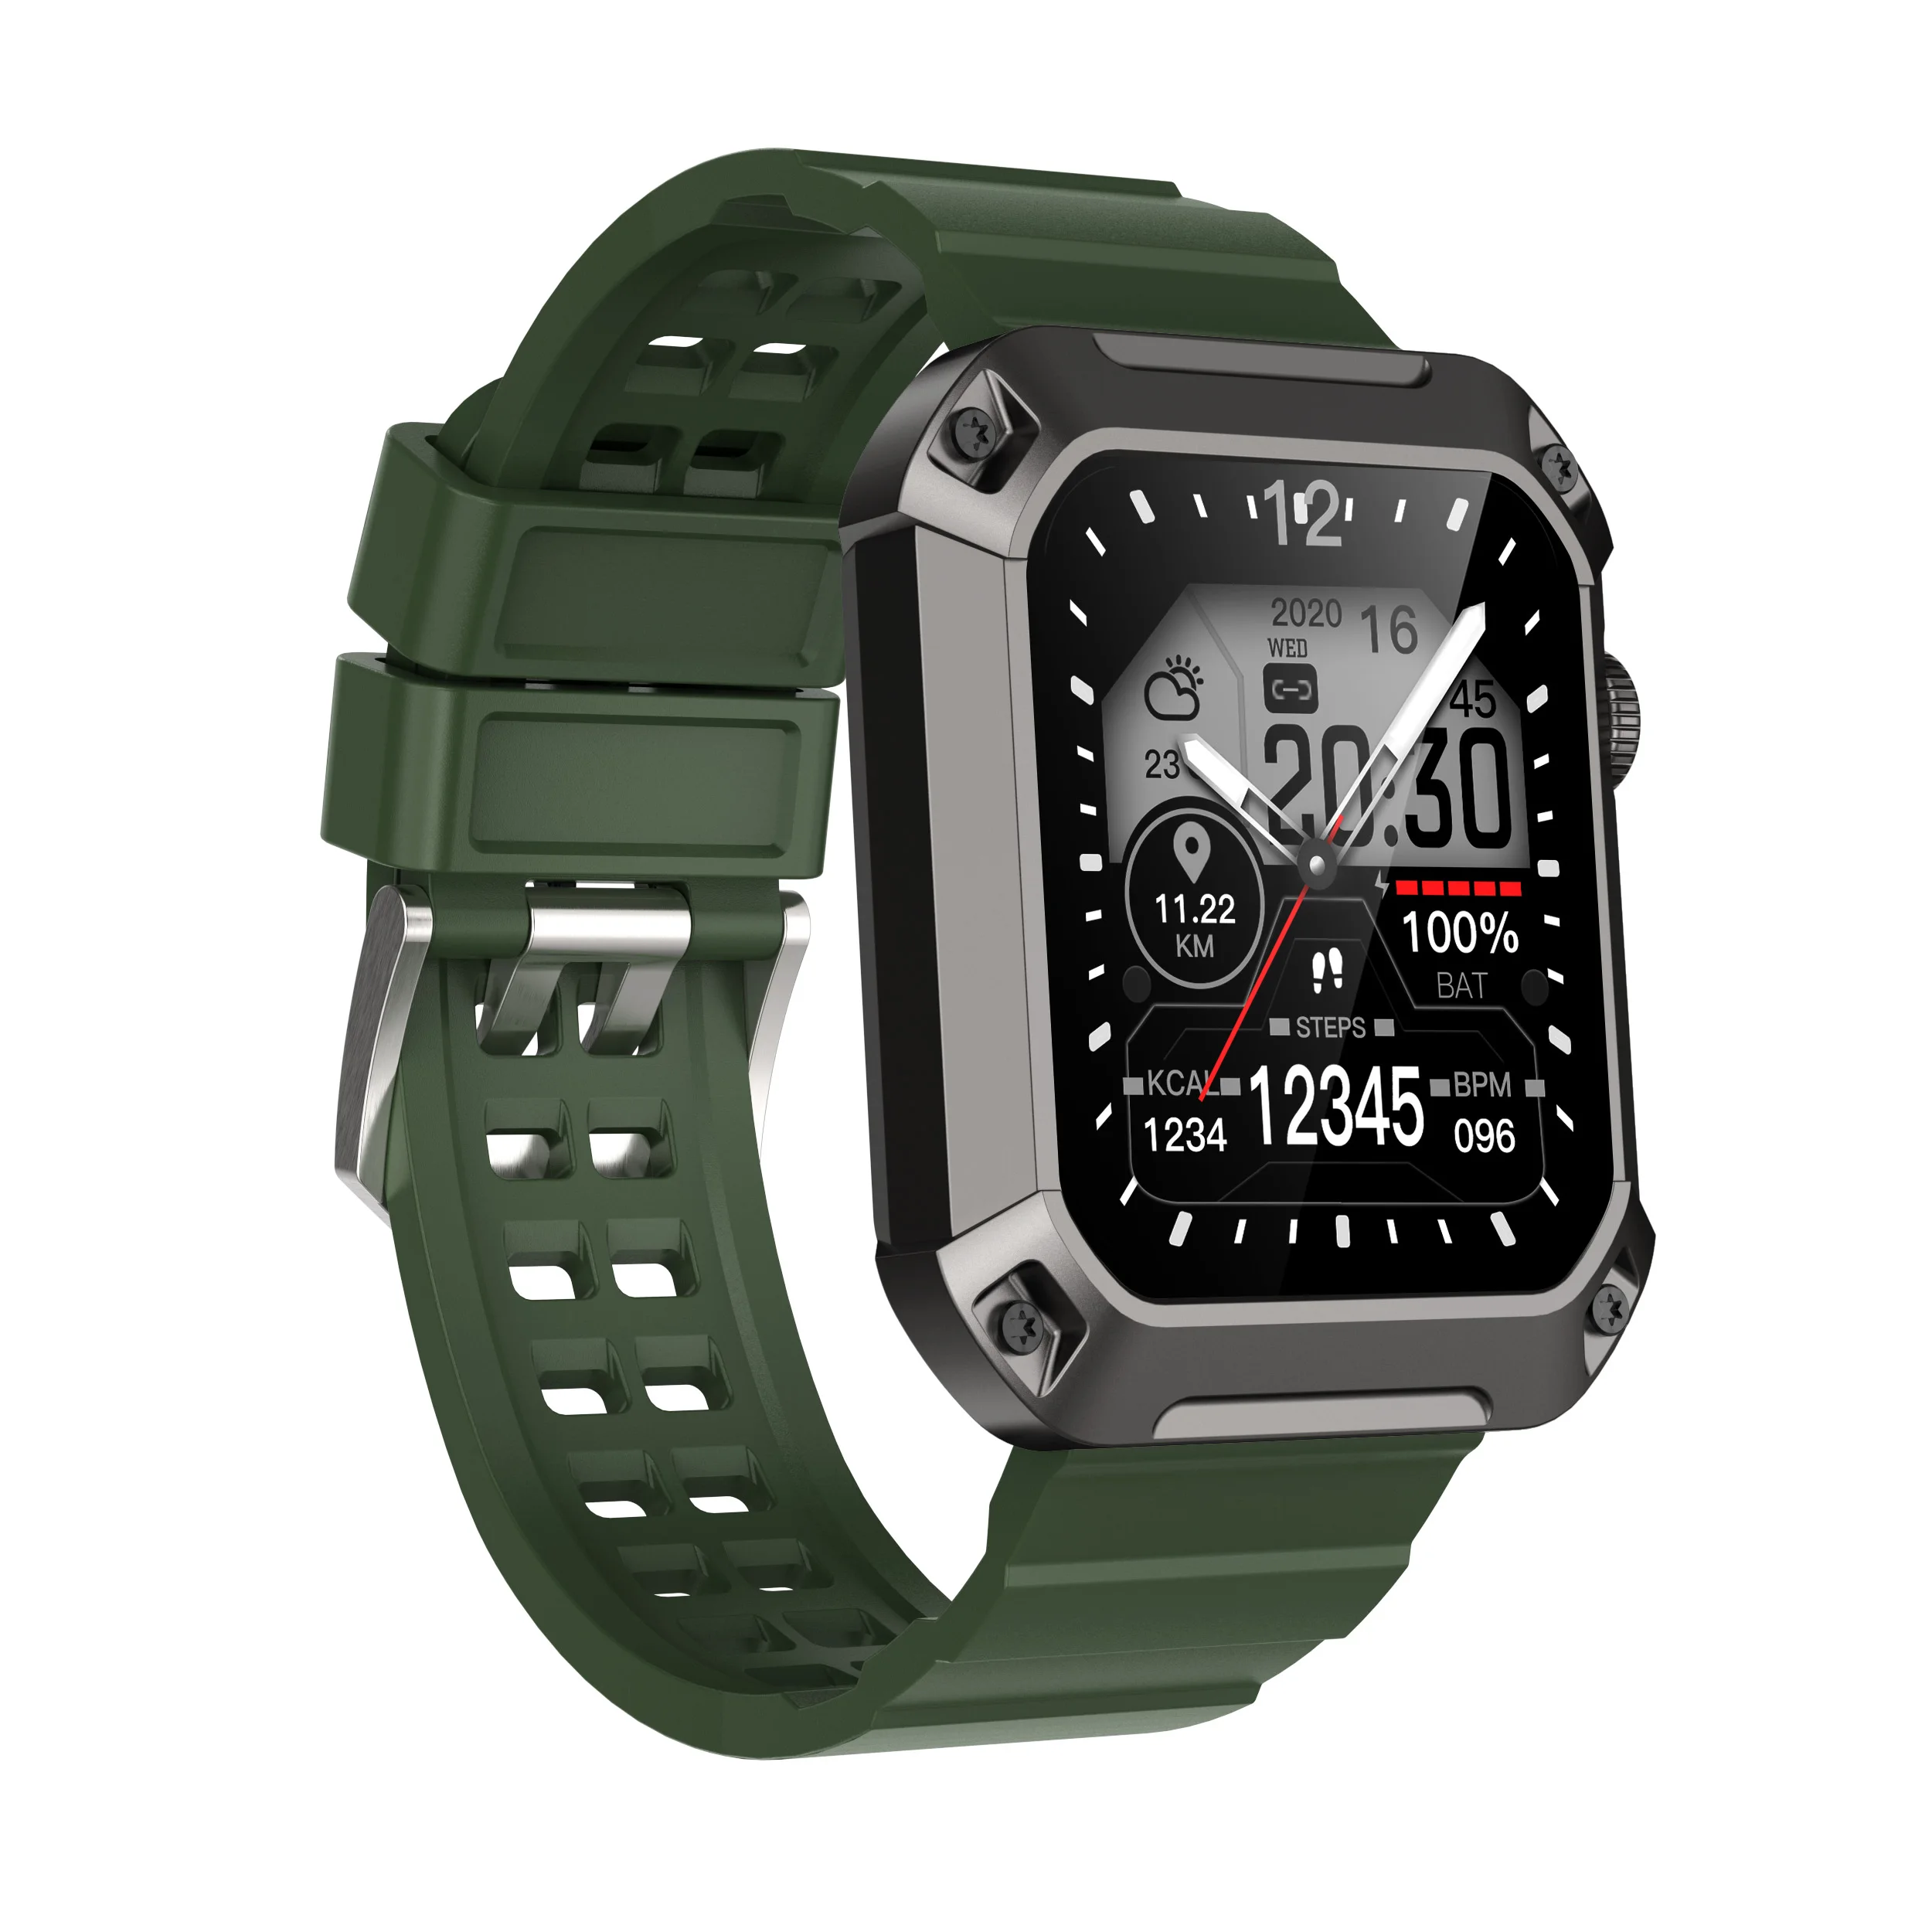 

Rugged smartwatch zinc alloy integrated body 114 sport modes dafit app ip68 waterproof swimming rugged smart watch